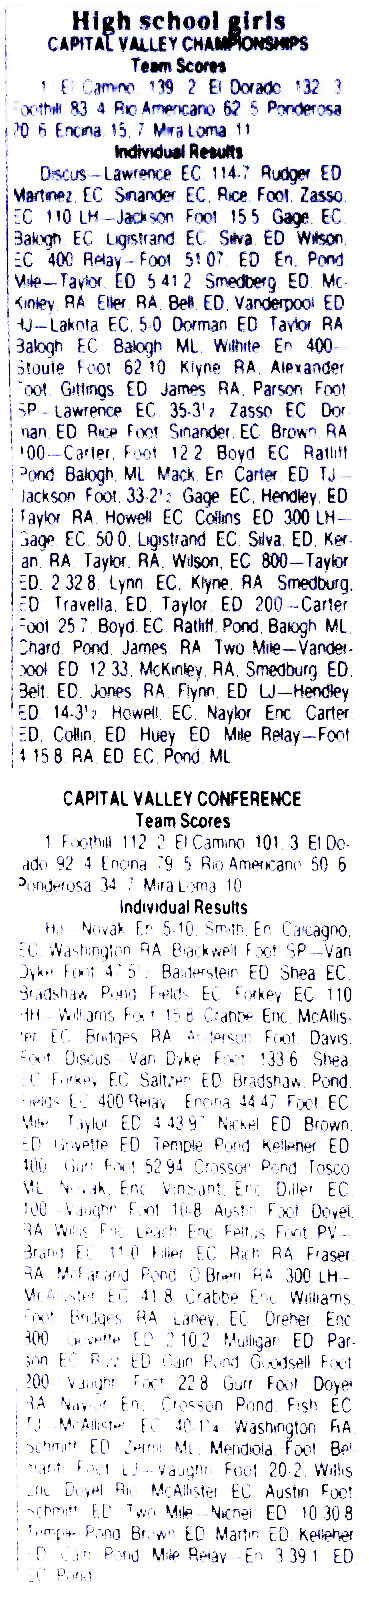 1986 CVC TF Finals Results